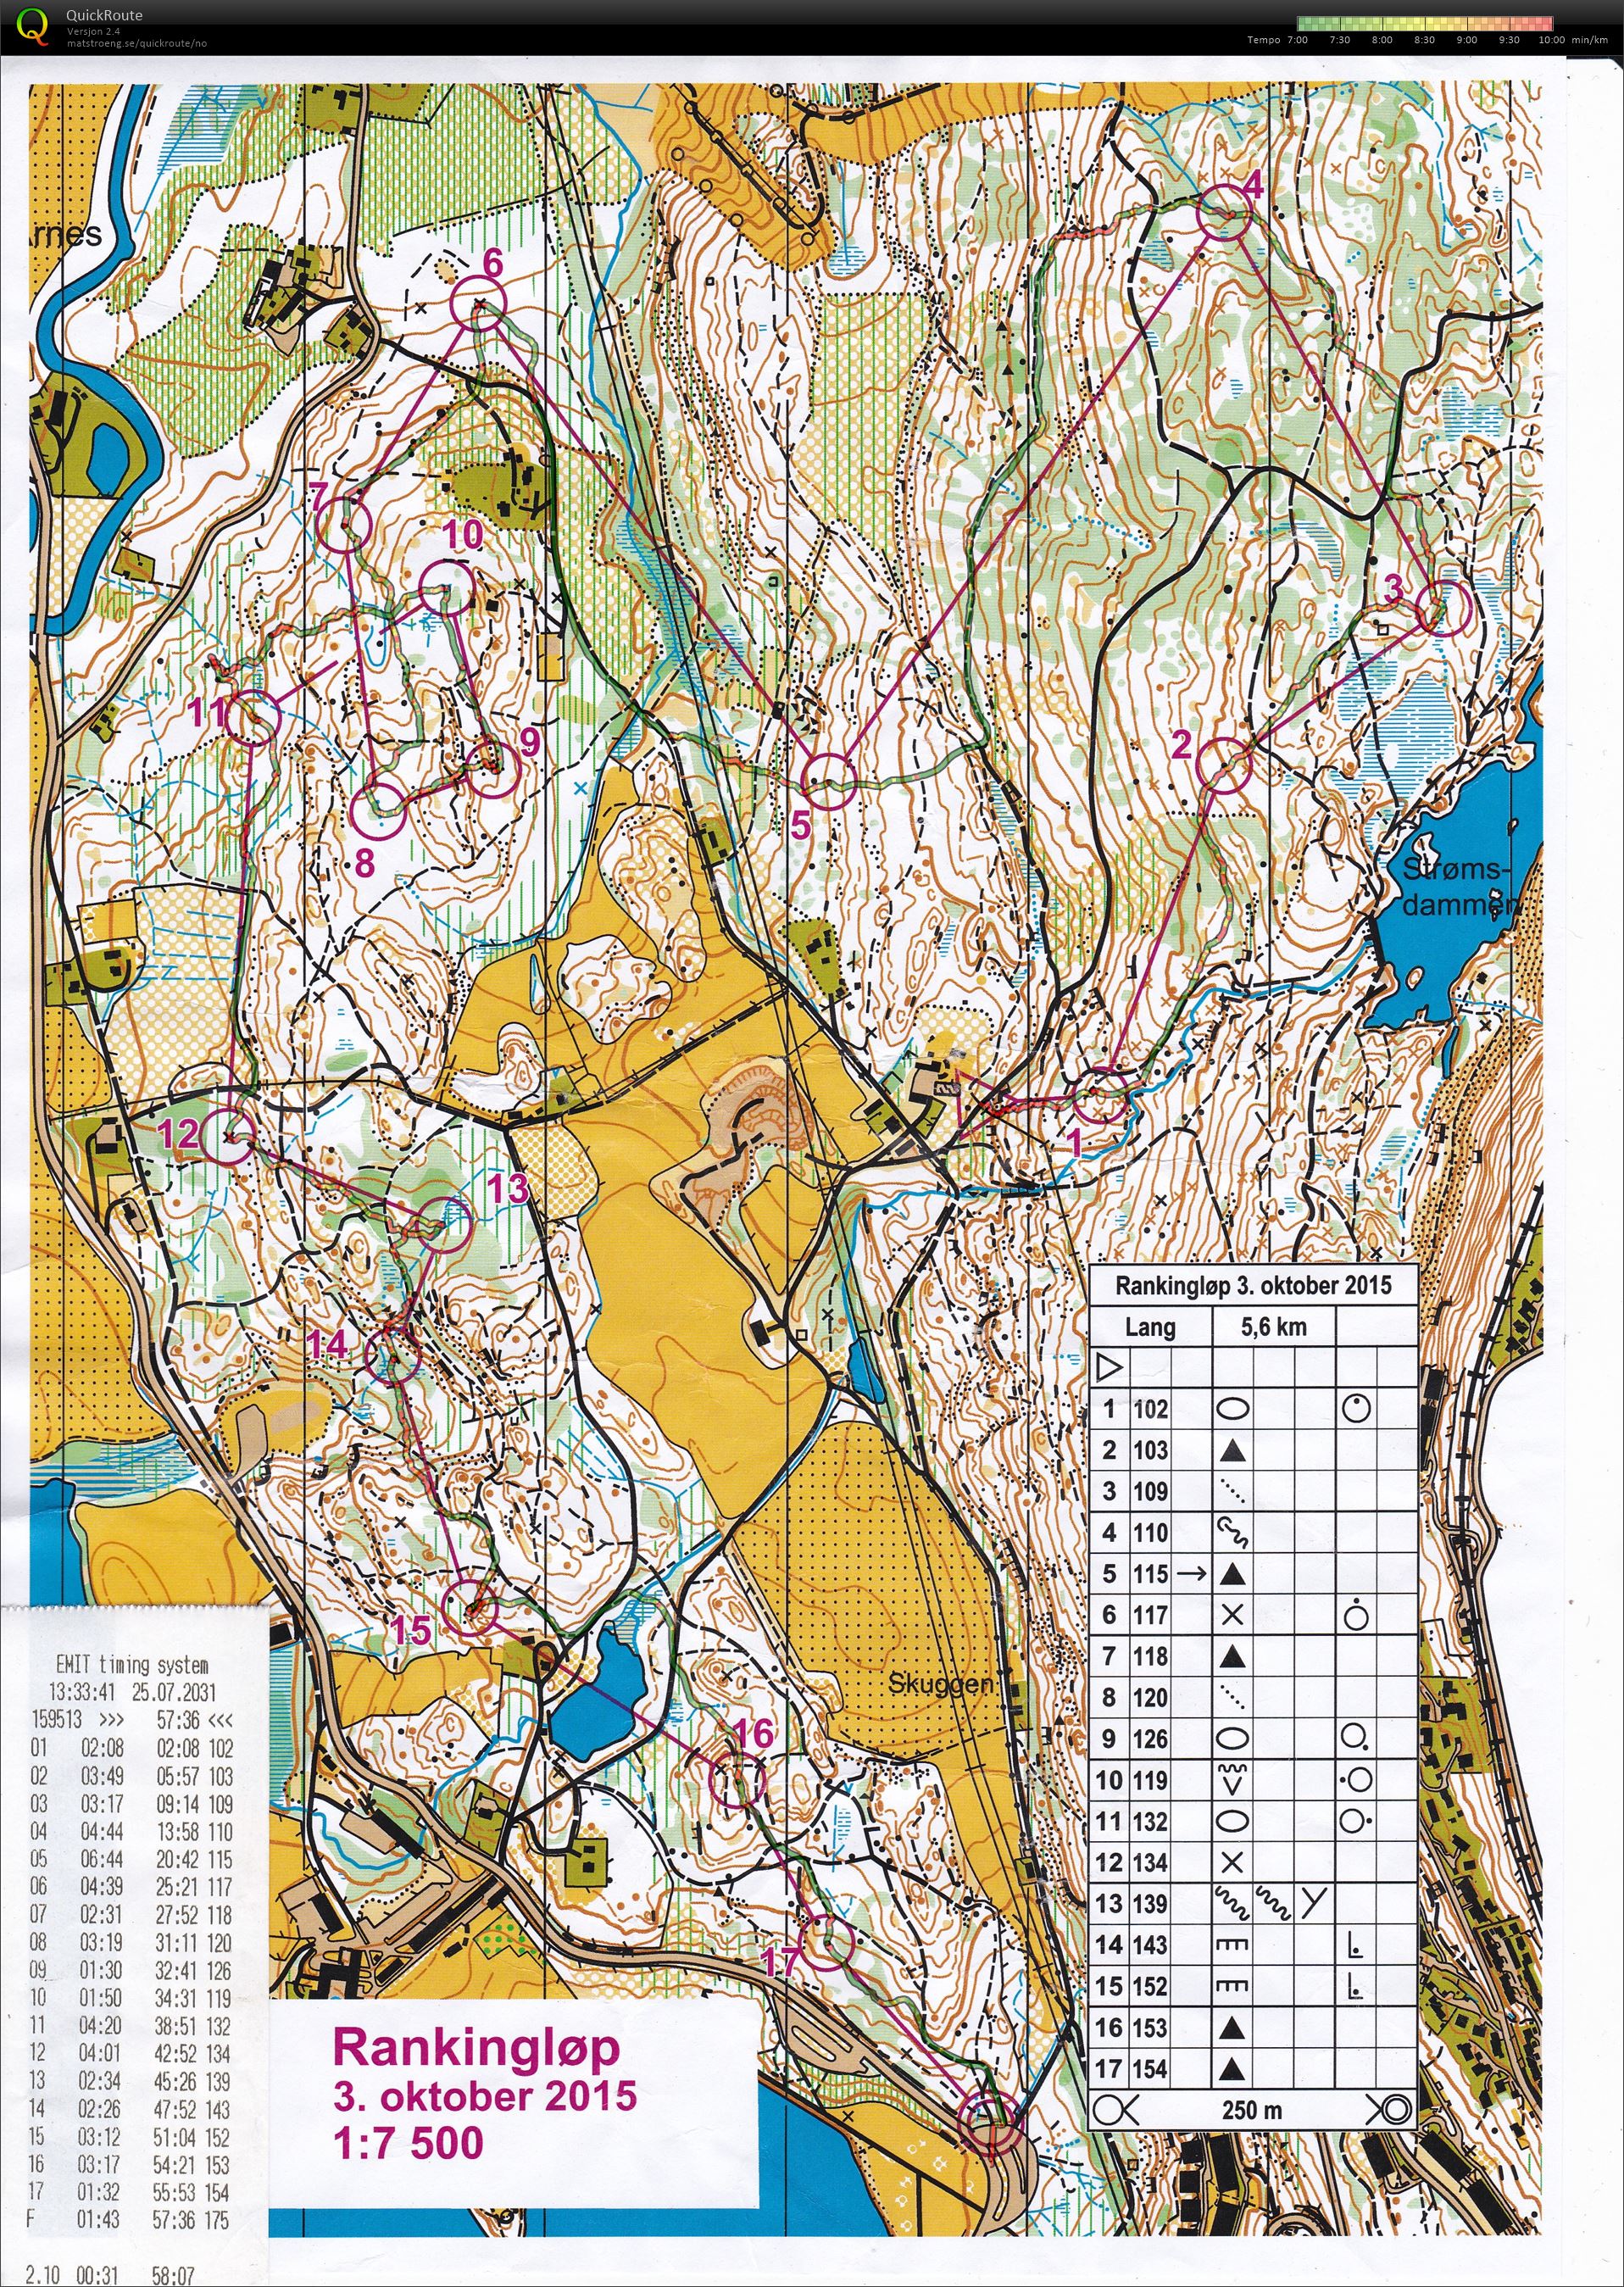 Geoform rankingløp - Lang 5,6 km (03/10/2015)